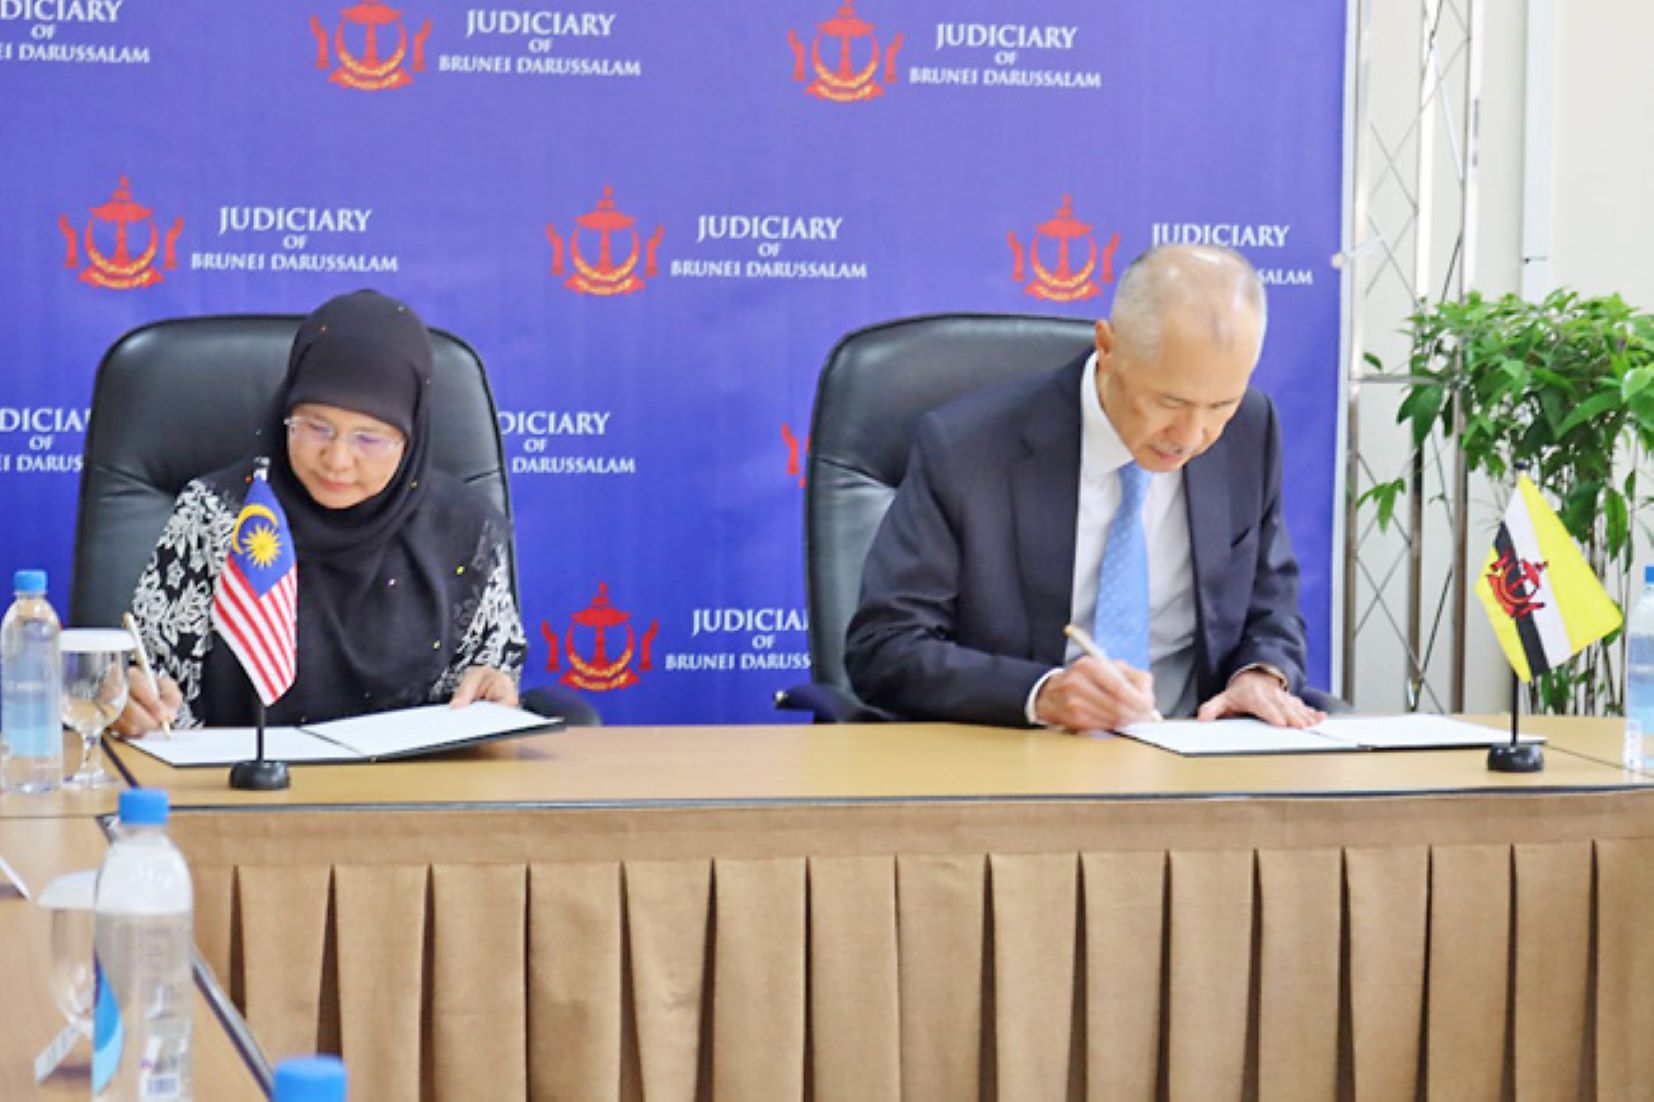 Brunei, Malaysia Signed Memorandum To Enhance Judicial Cooperation